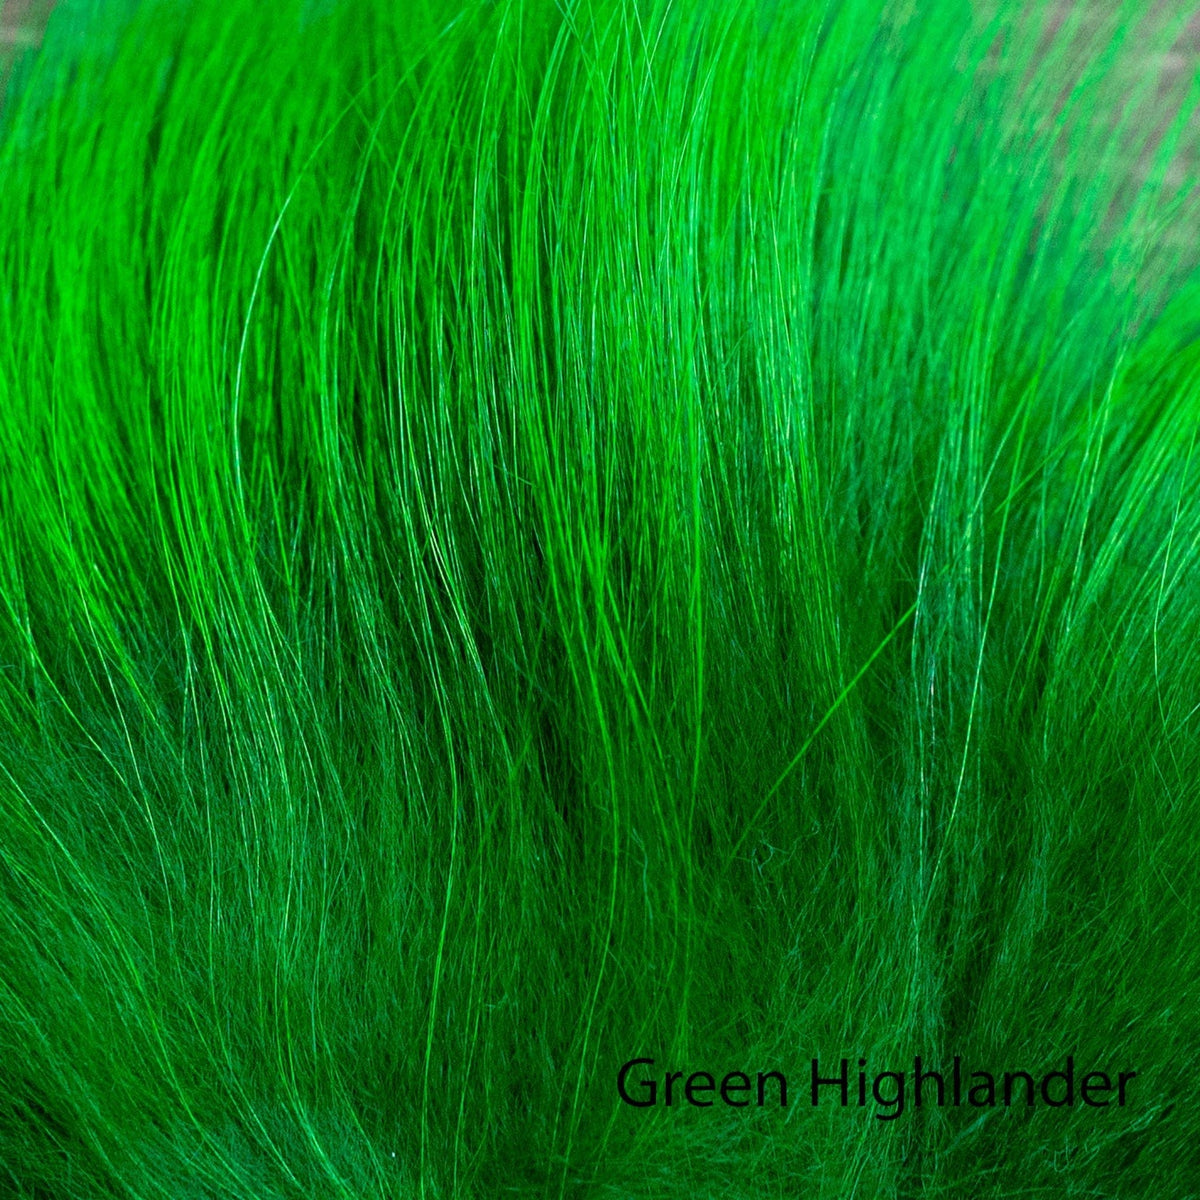 Finn Racoon Hair Green Highlander